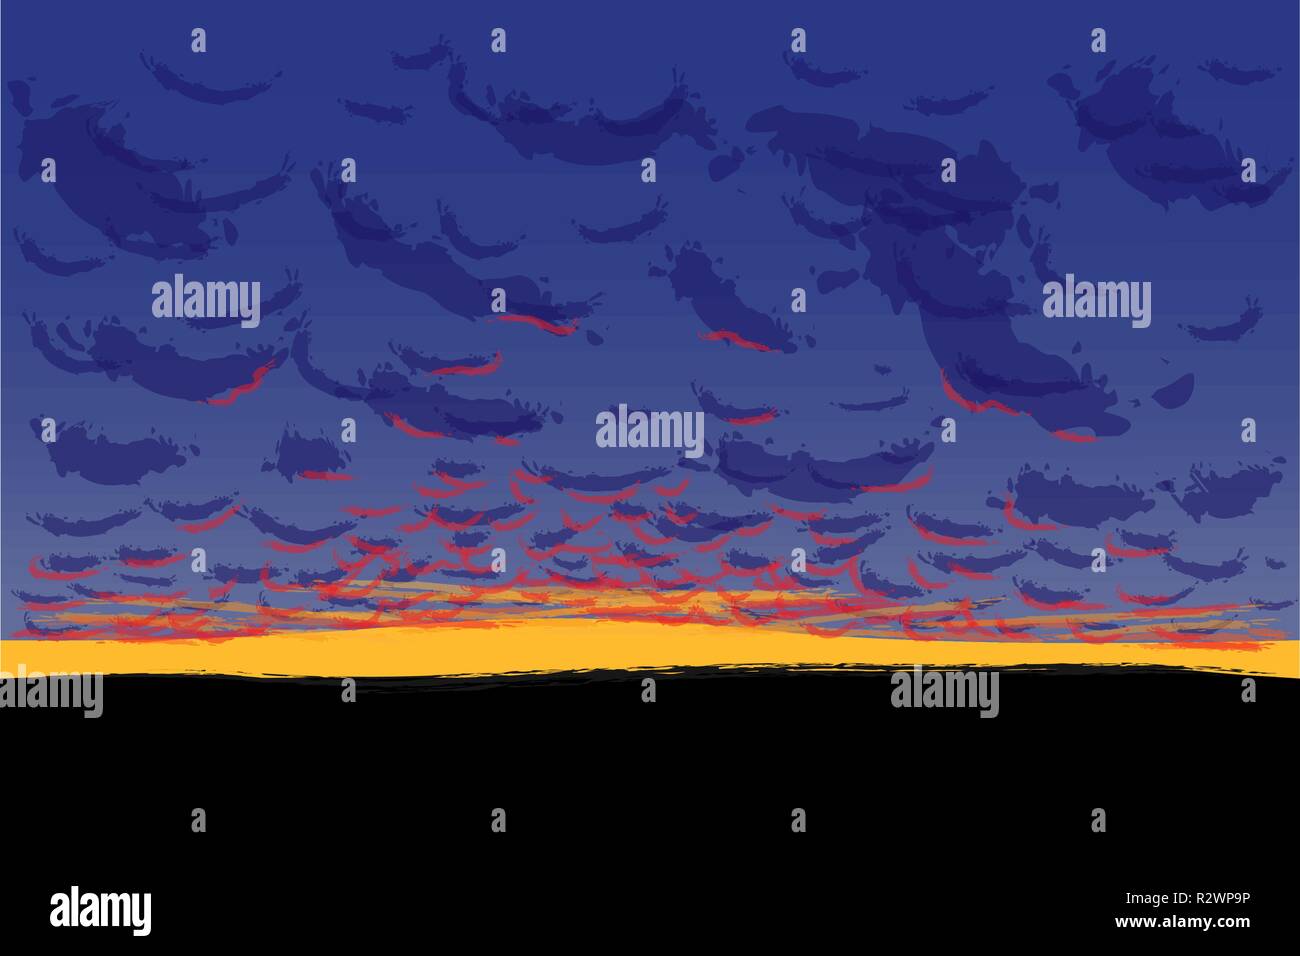 Sonnenuntergang Himmel mit Wolken cumulus, Vector Illustration Stock Vektor